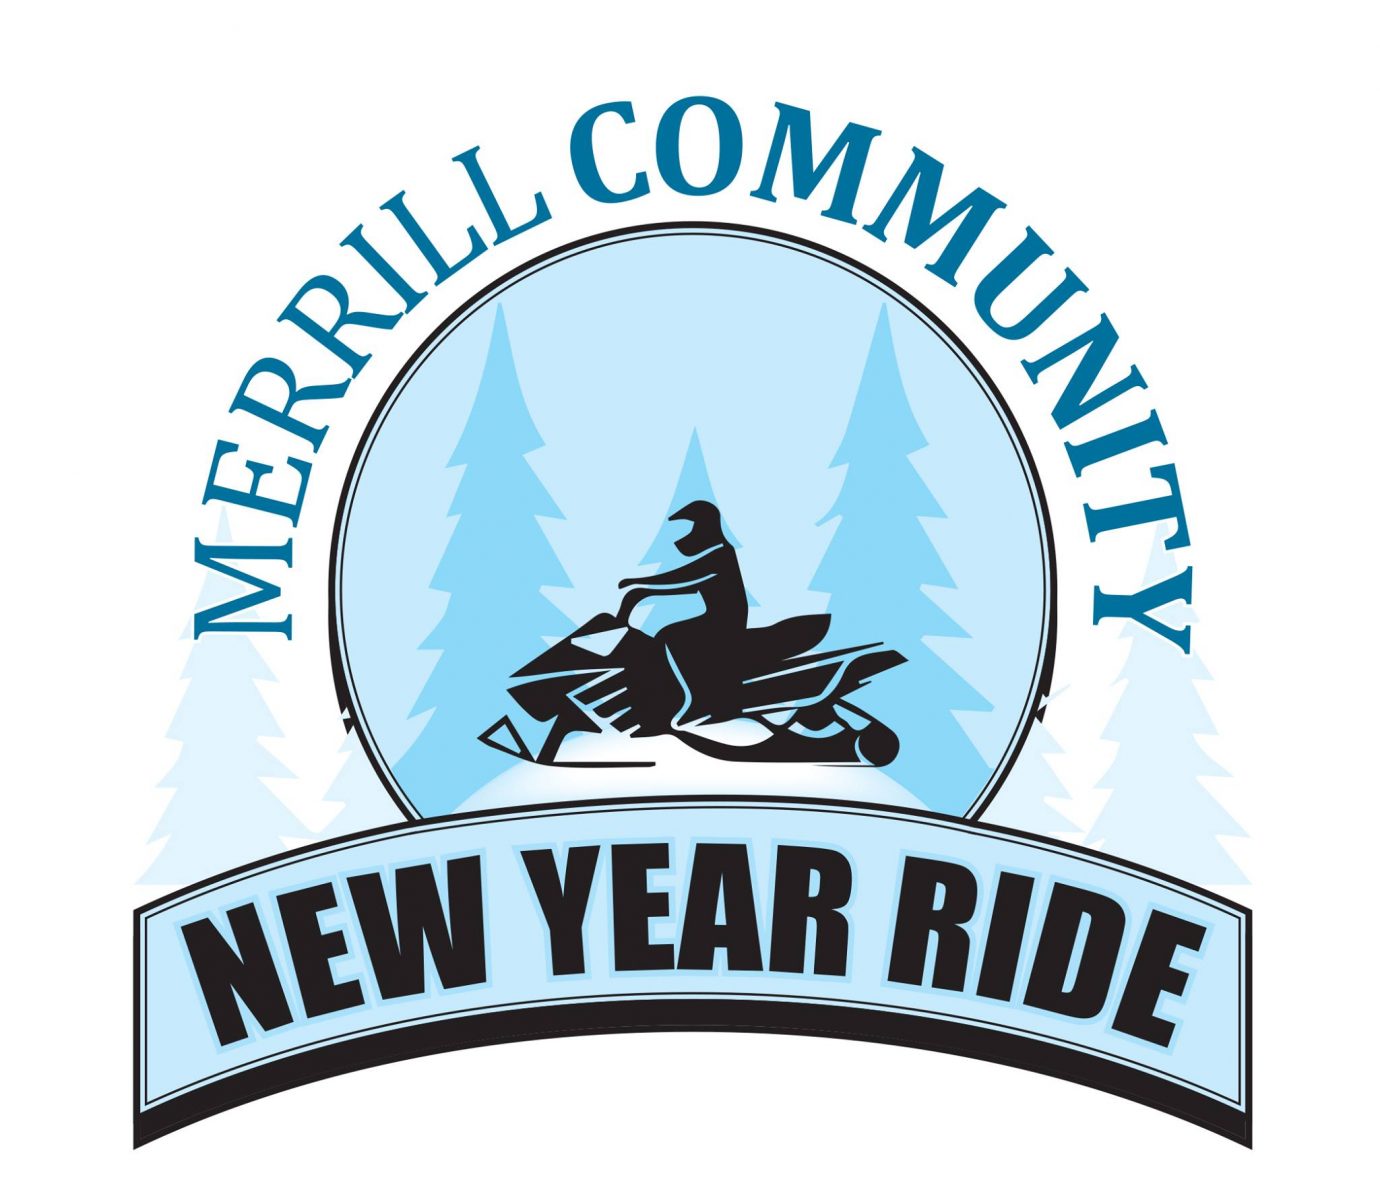 New Year Ride extends application deadline